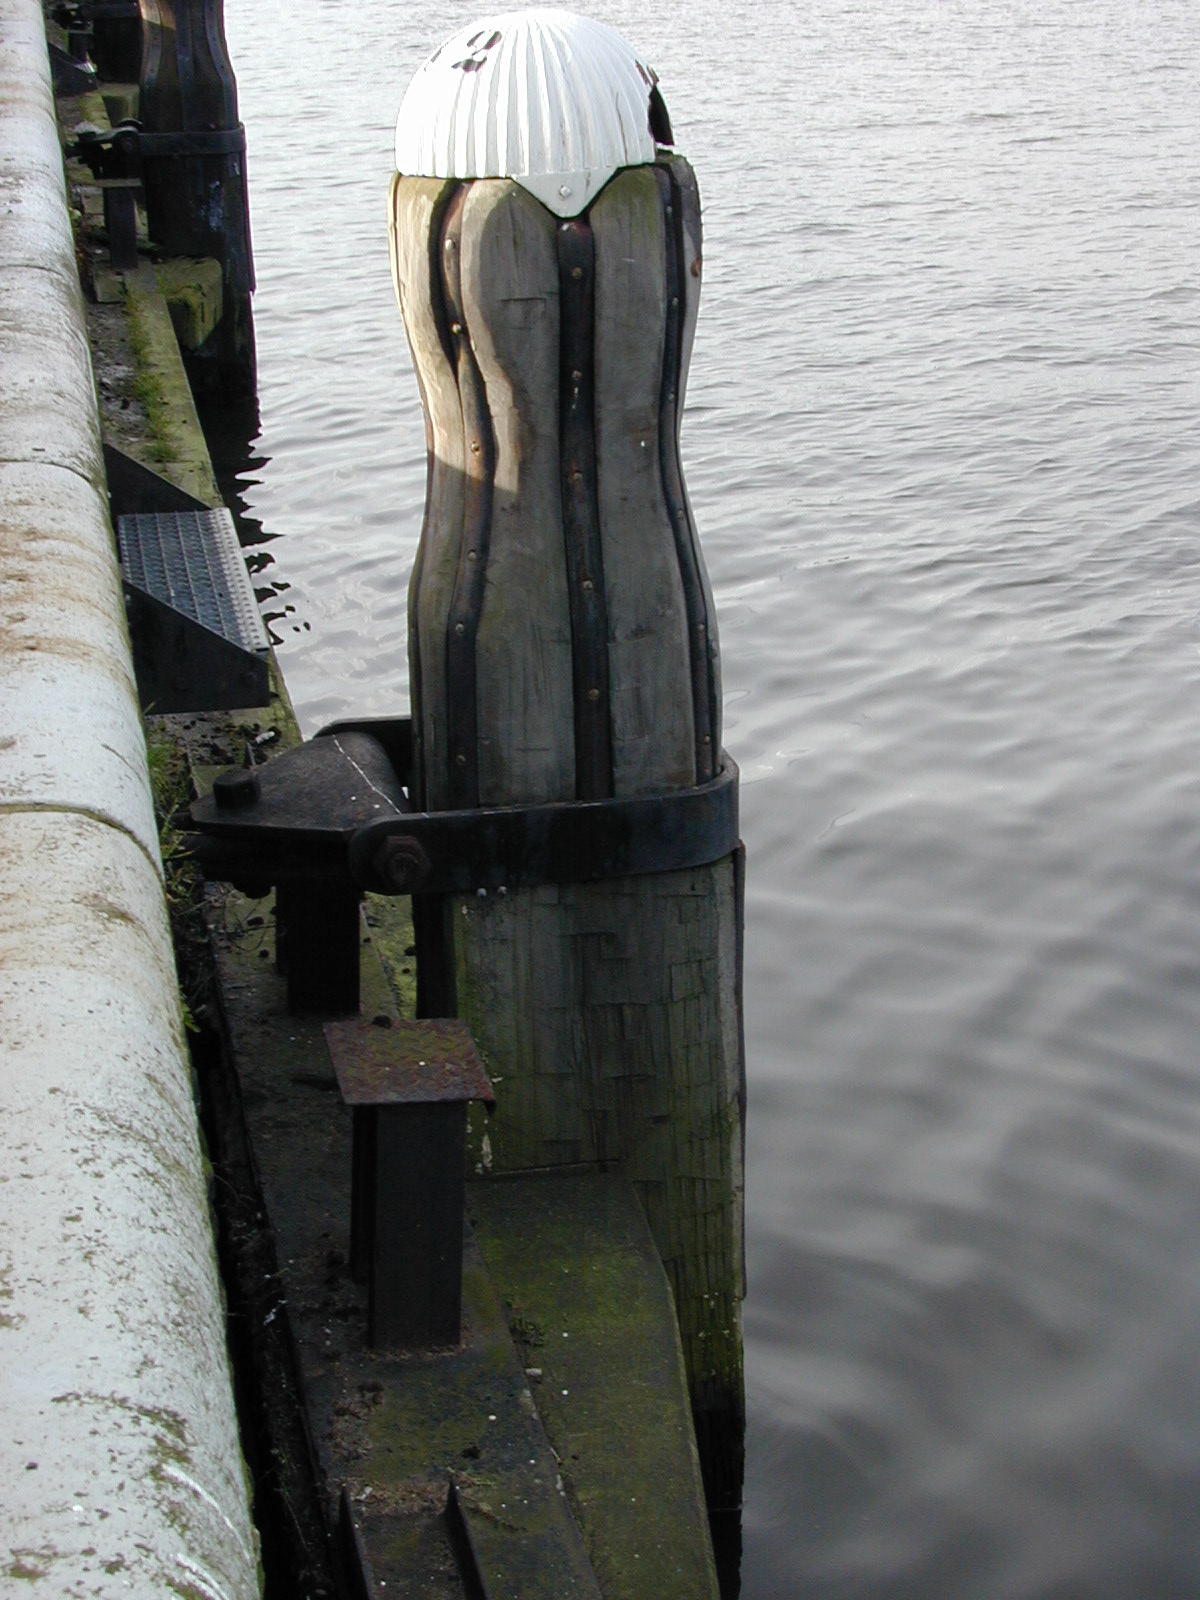 baulder boulder wood water harbour pole wharf quay